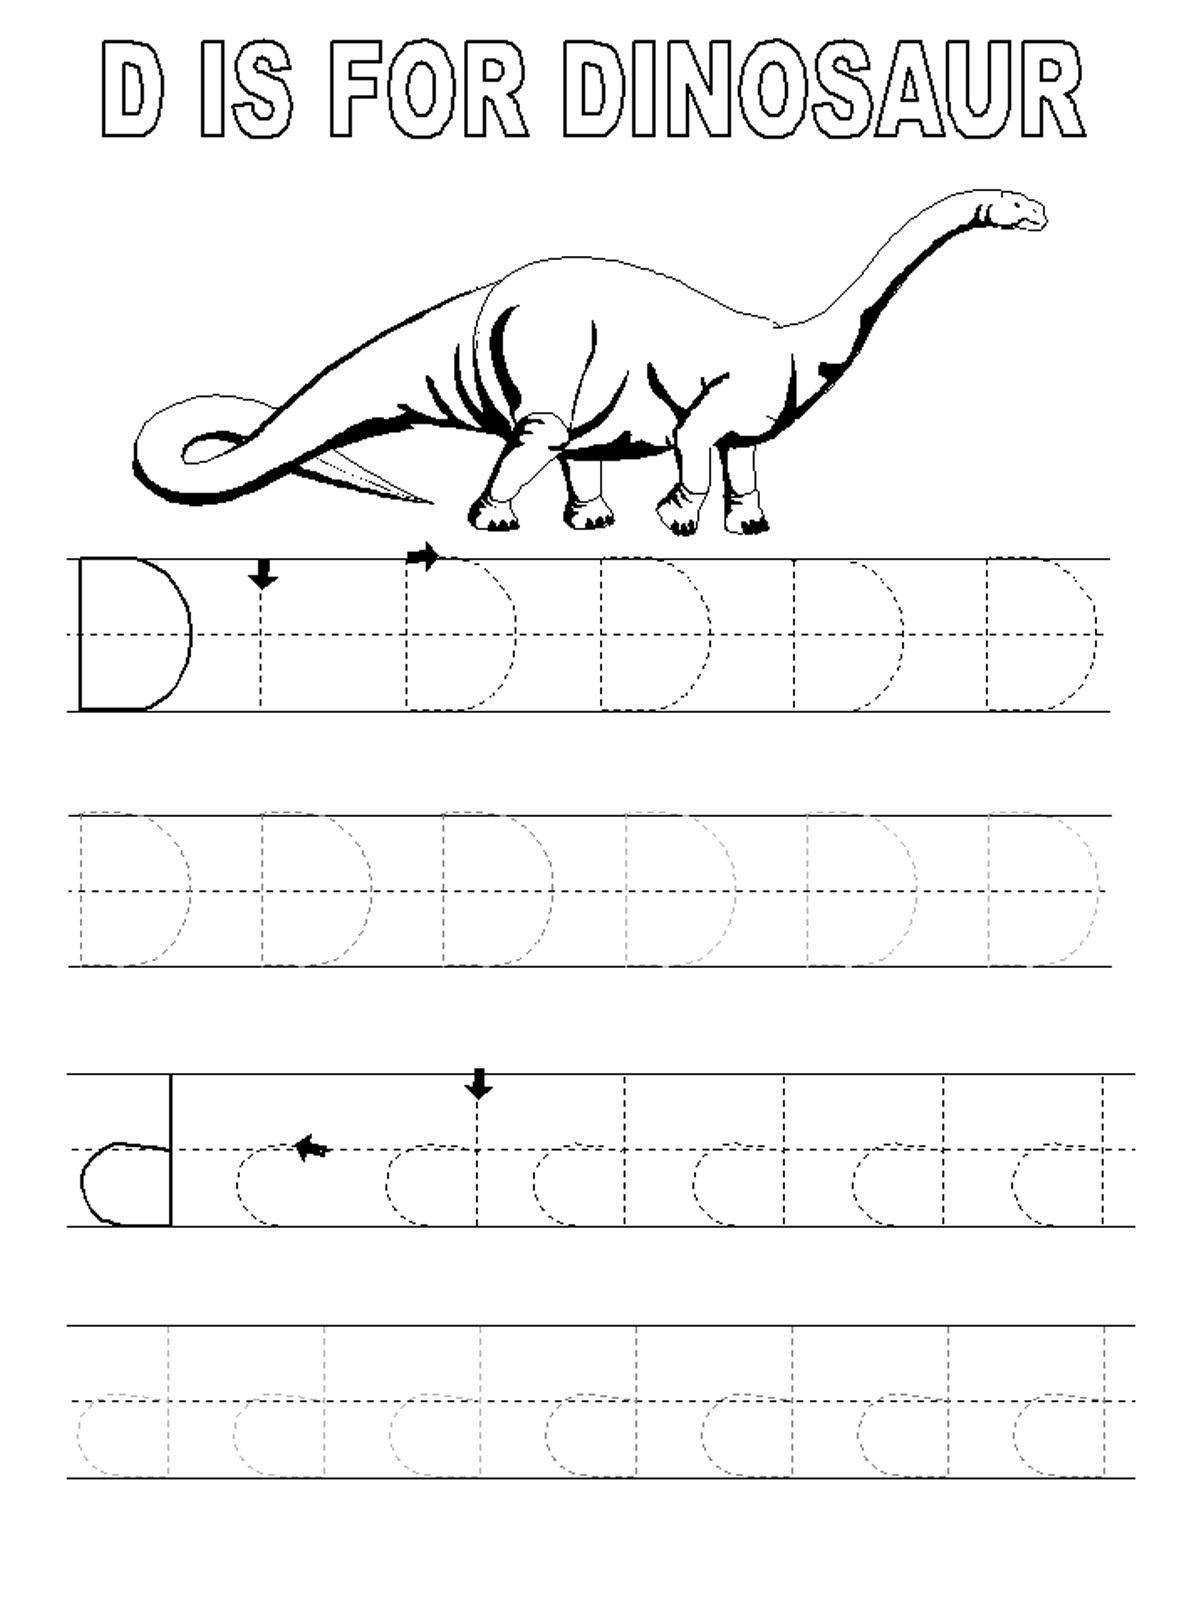 trace-letters-worksheet-d-dinosaurus